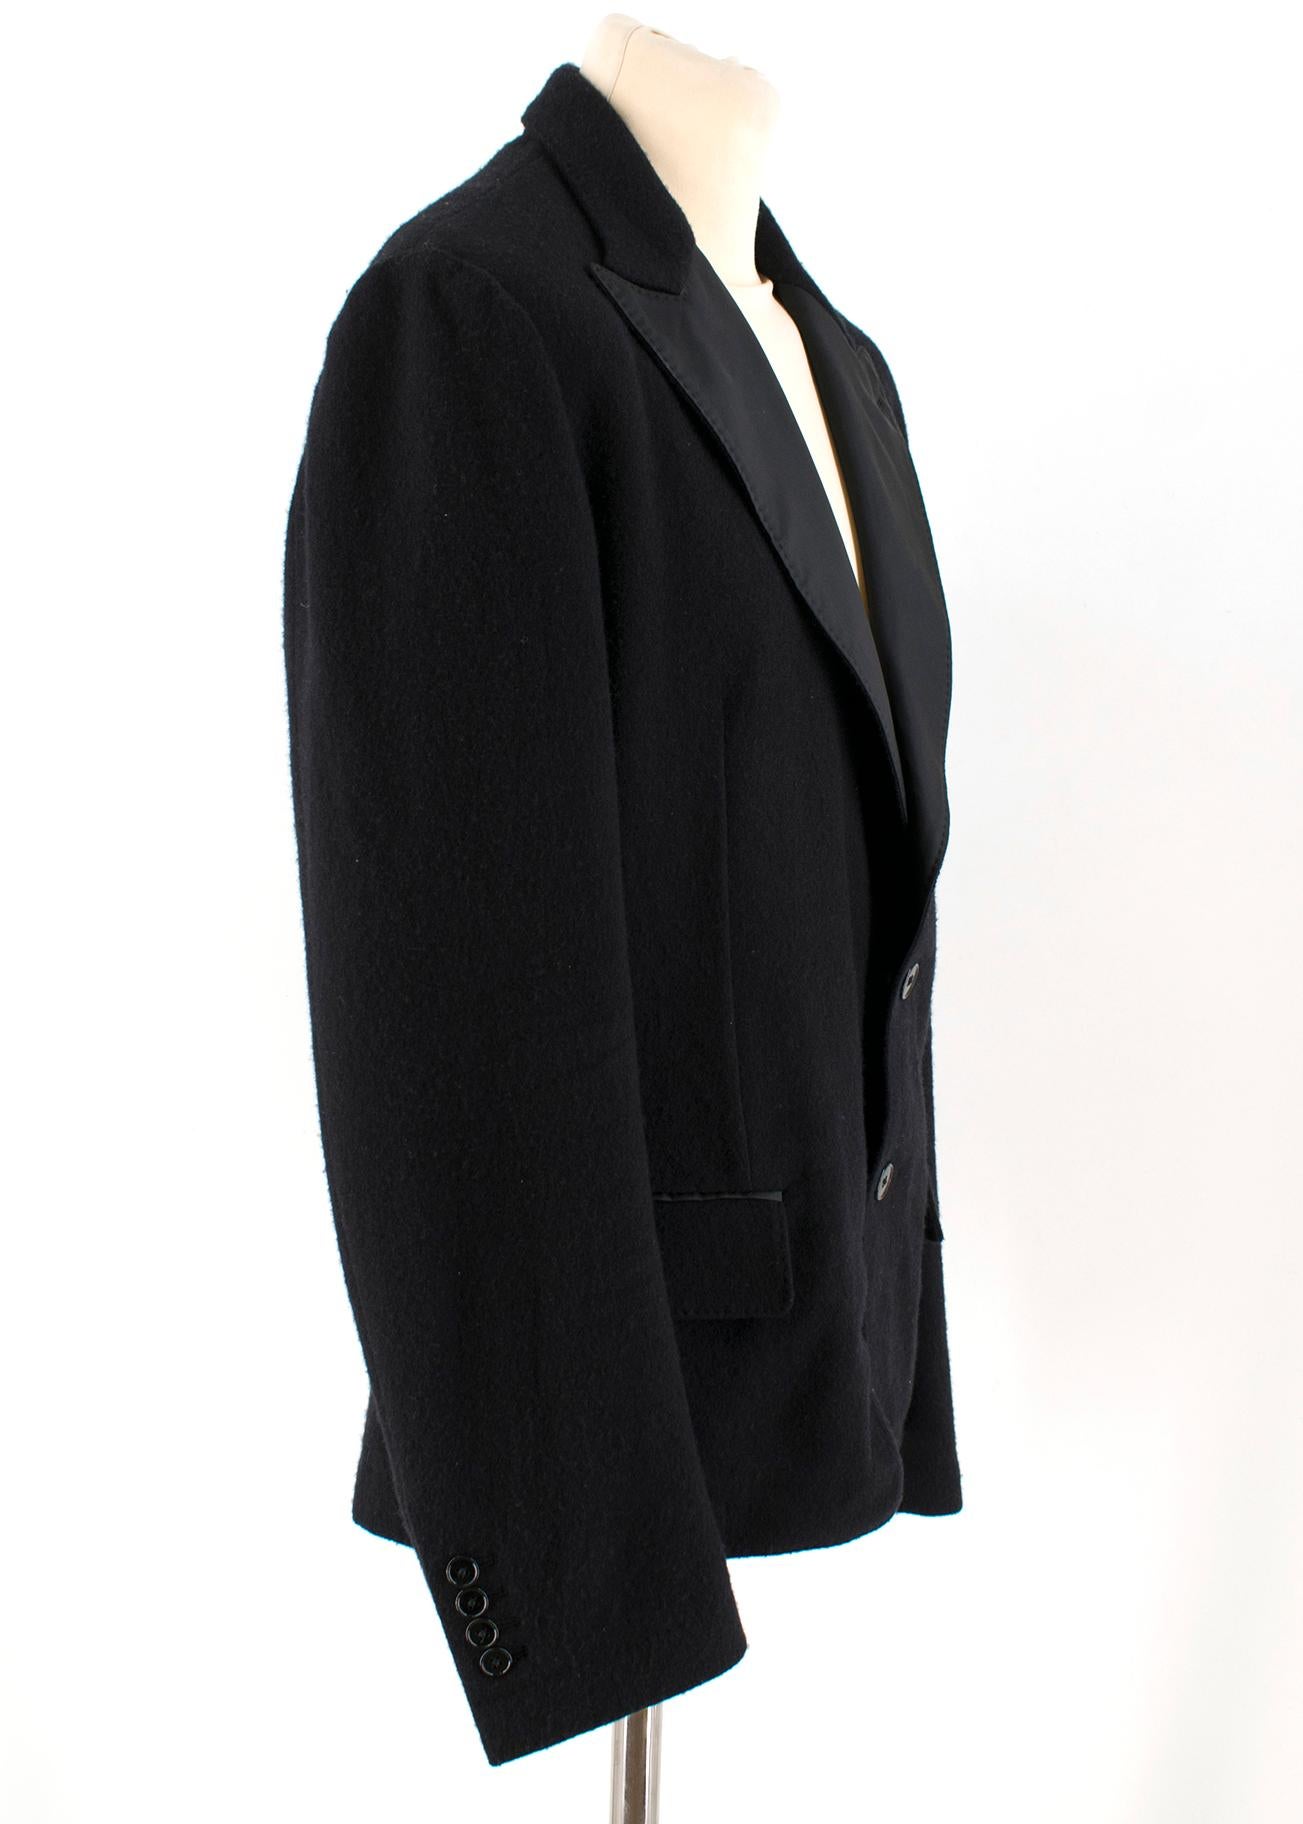 Dolce & Gabbana Black Wool-blend Jacket 

- Black Blazer Jacket
- Soft Wool blend fabric
- Satin peak lapels, single breasted 
- Dual front flap at front sides
- Internal side slip pockes, partially lined 
- 90% wool, 6% acetate, 4% polyamide